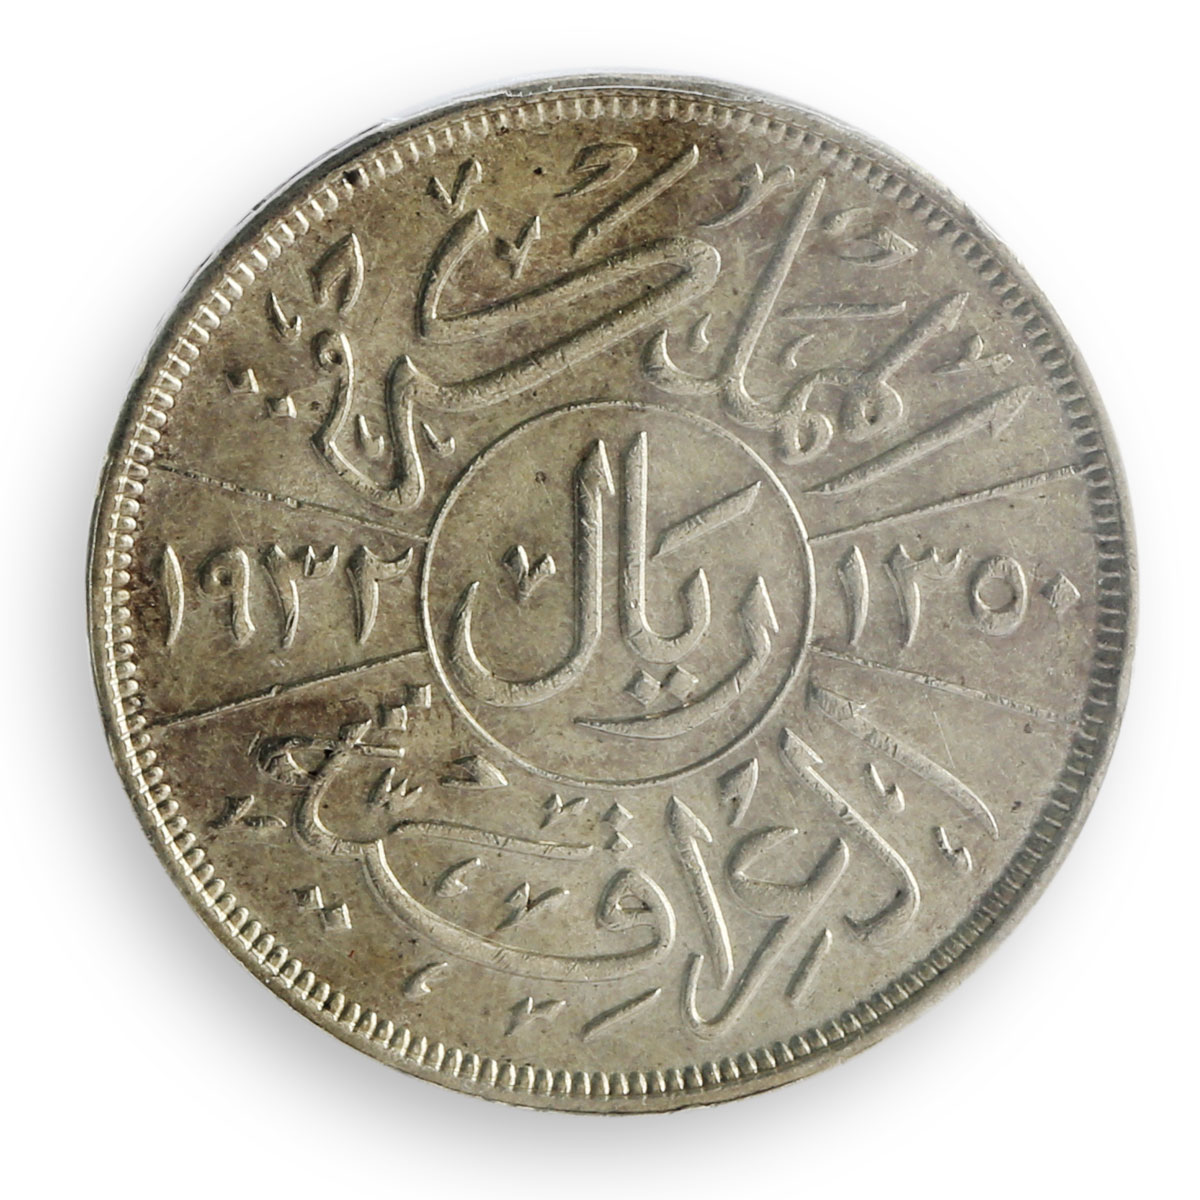 Iraq 1 riyal King of Iraq Faisal I PCGS AU Details silver coin 1932